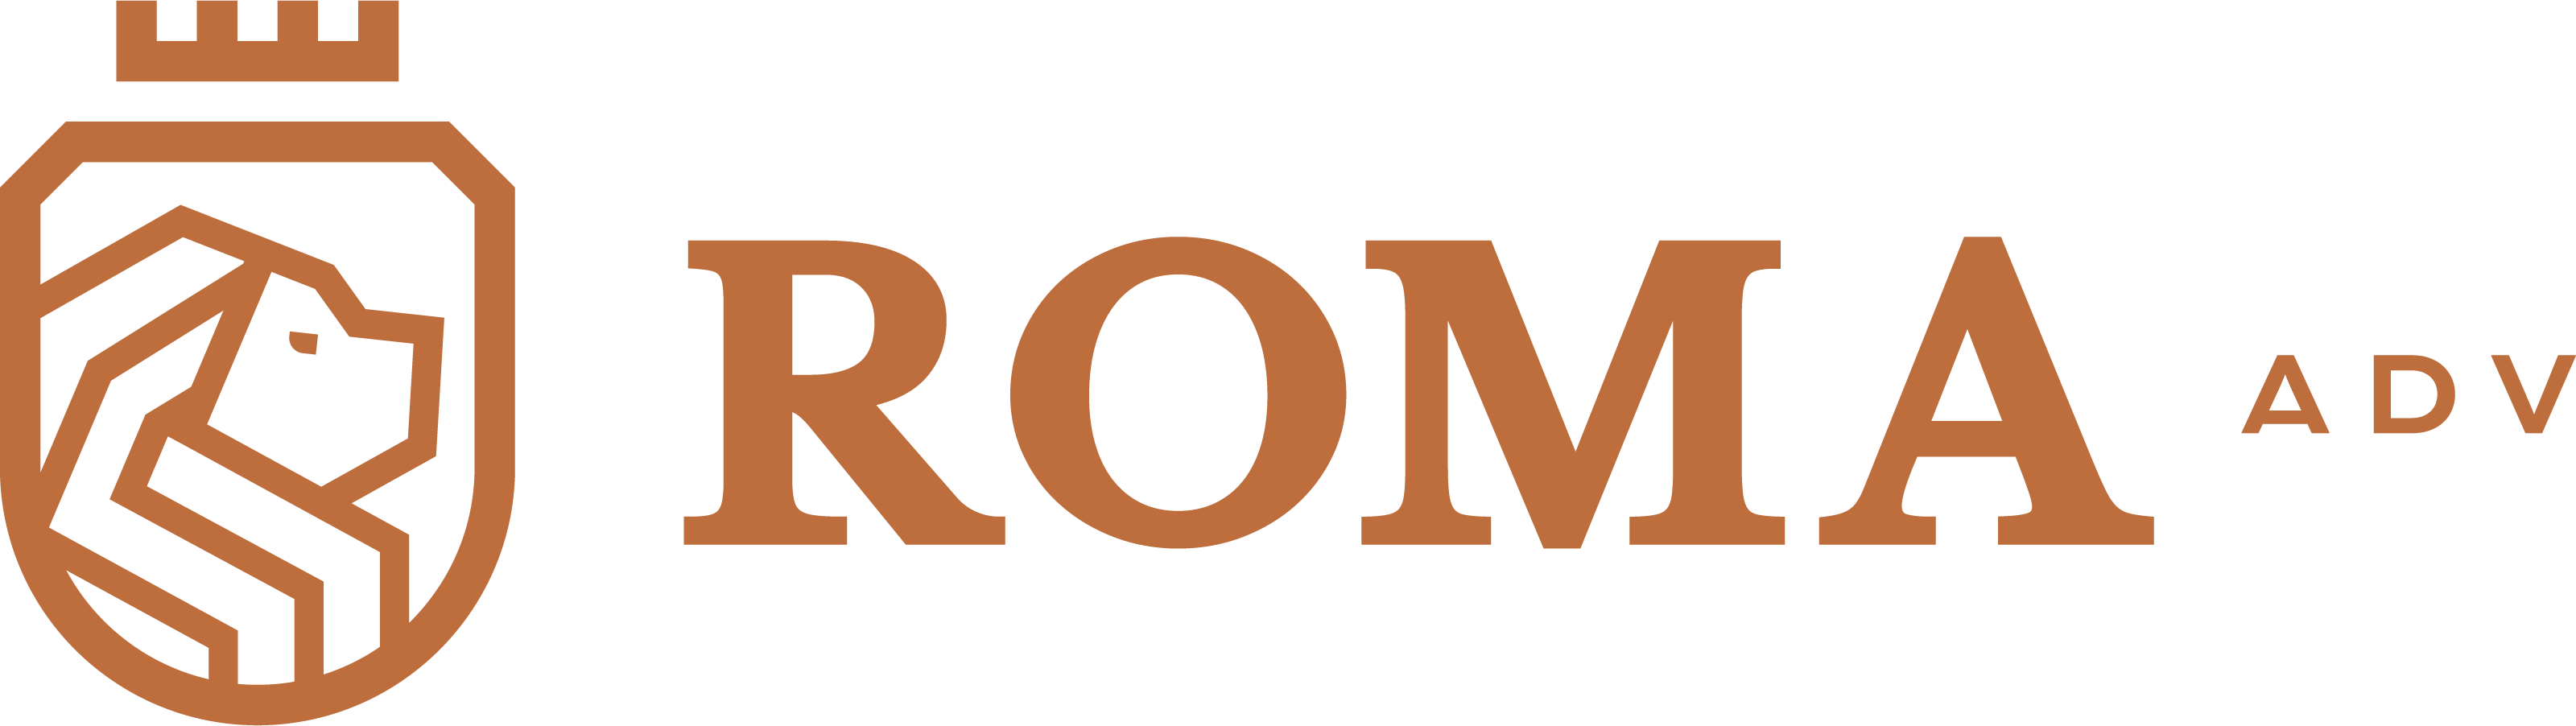 Logo Roma Advocacia